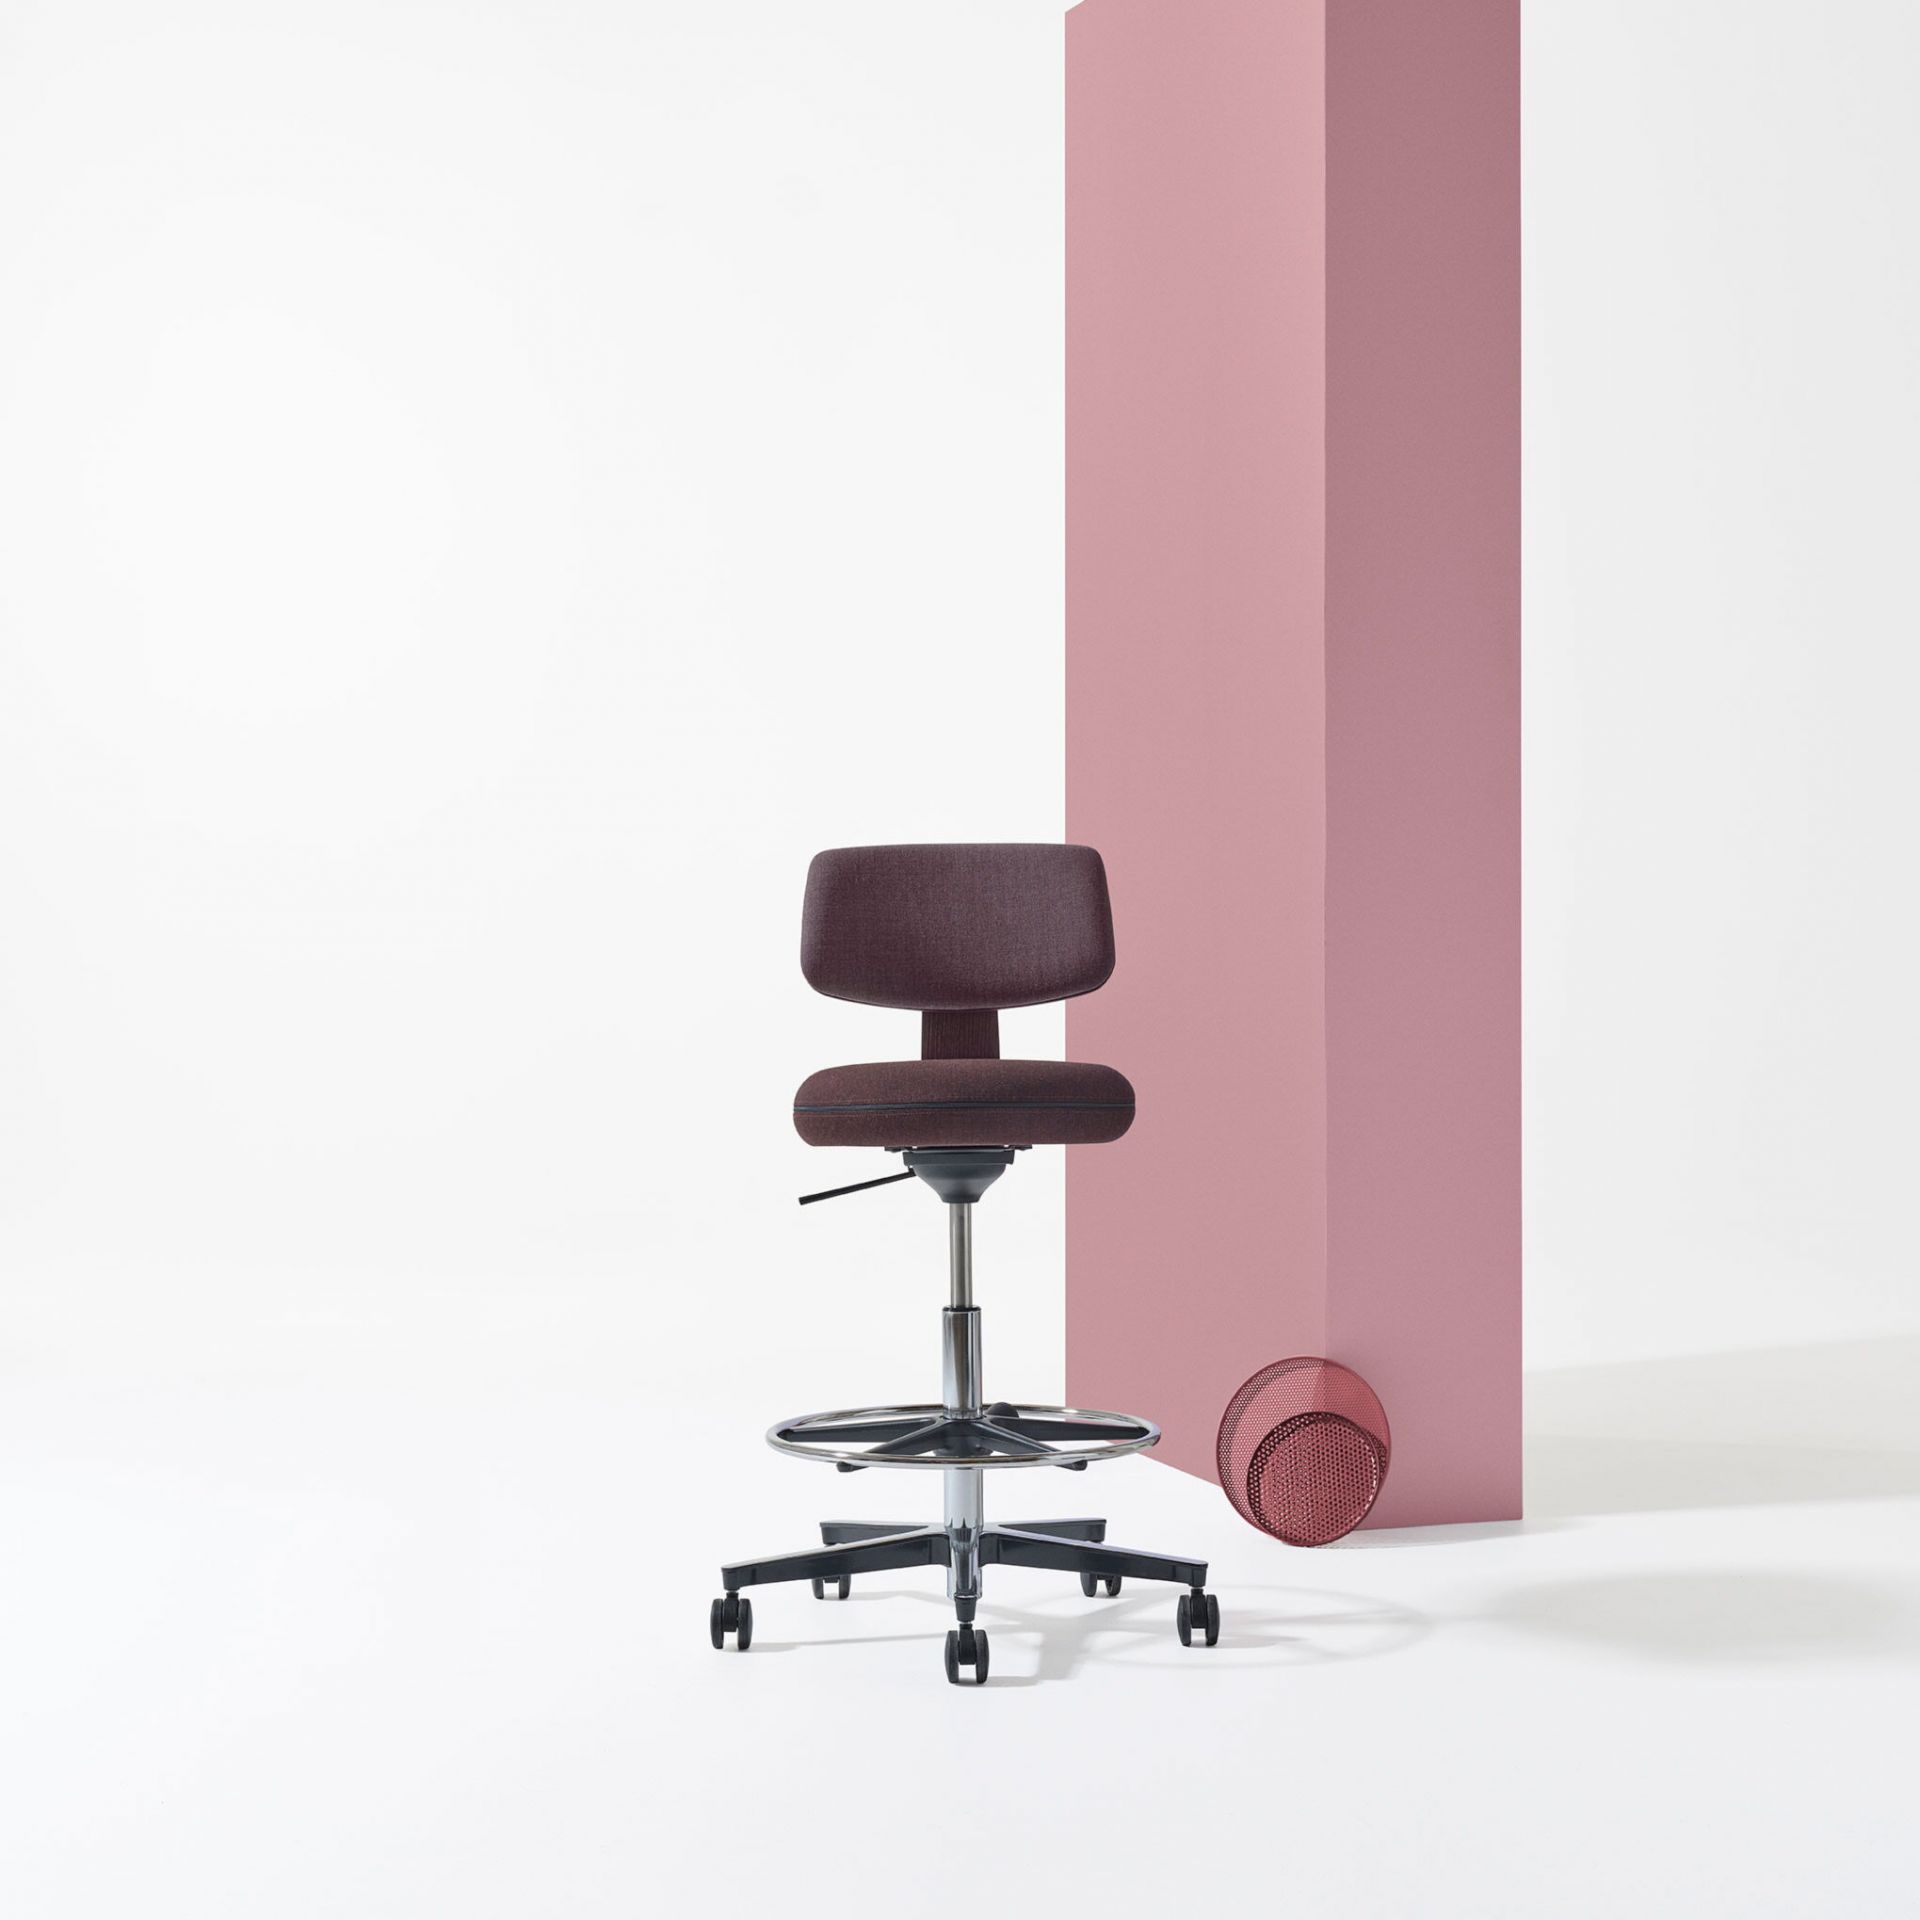 Savo 360 360 high chair product image 3